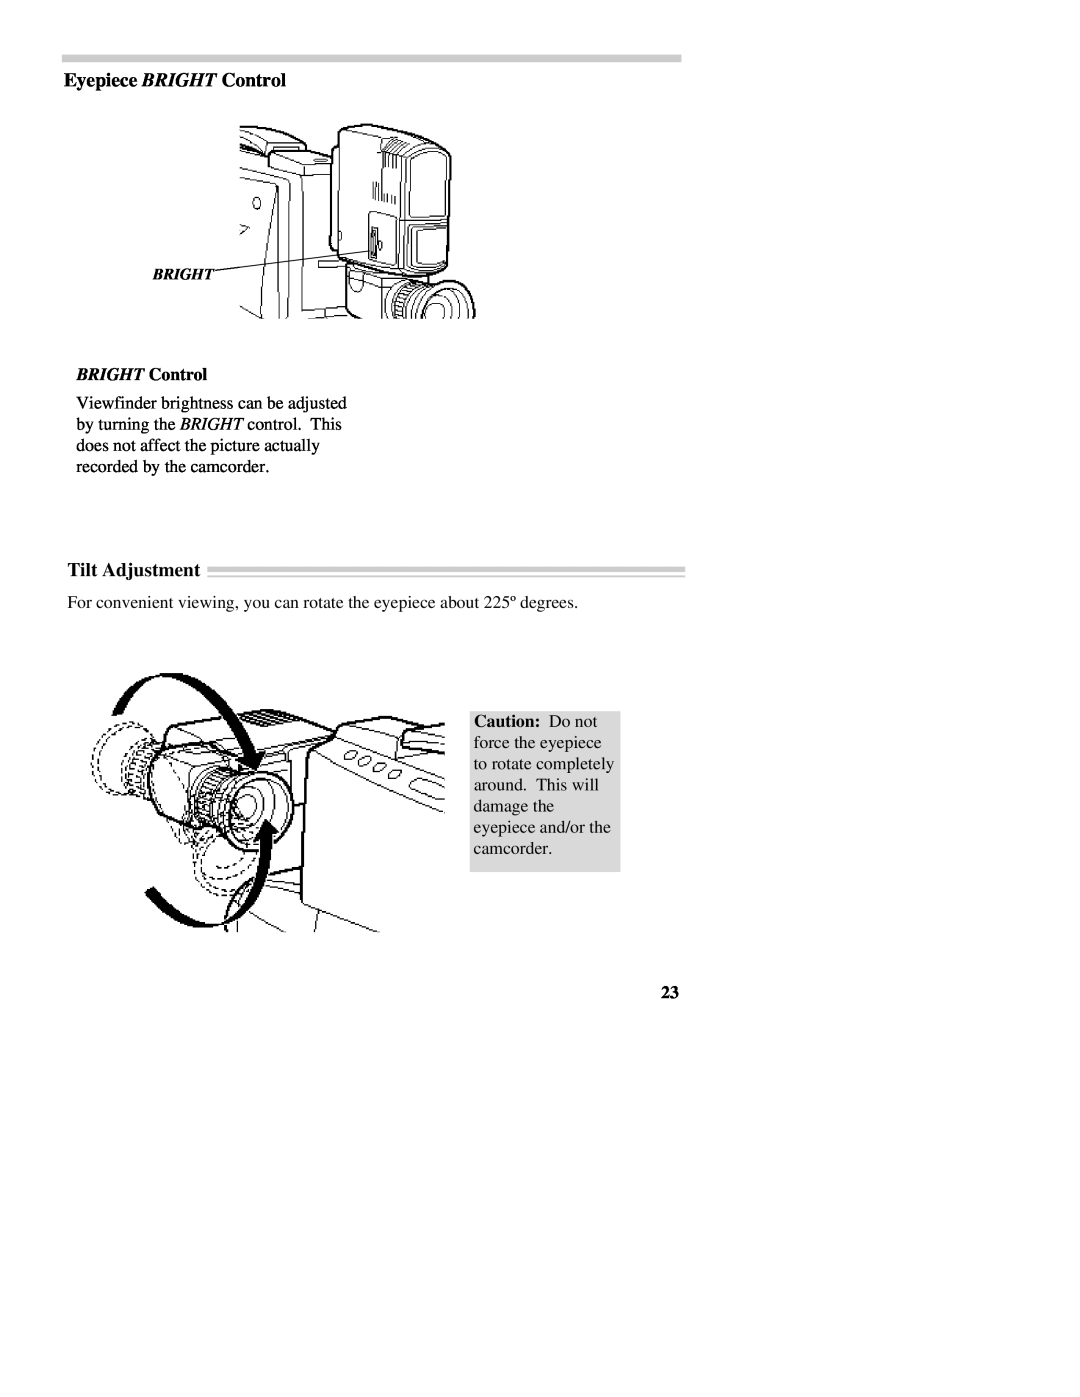 RCA CC437 manual Eyepiece BRIGHT Control, Tilt Adjustment 